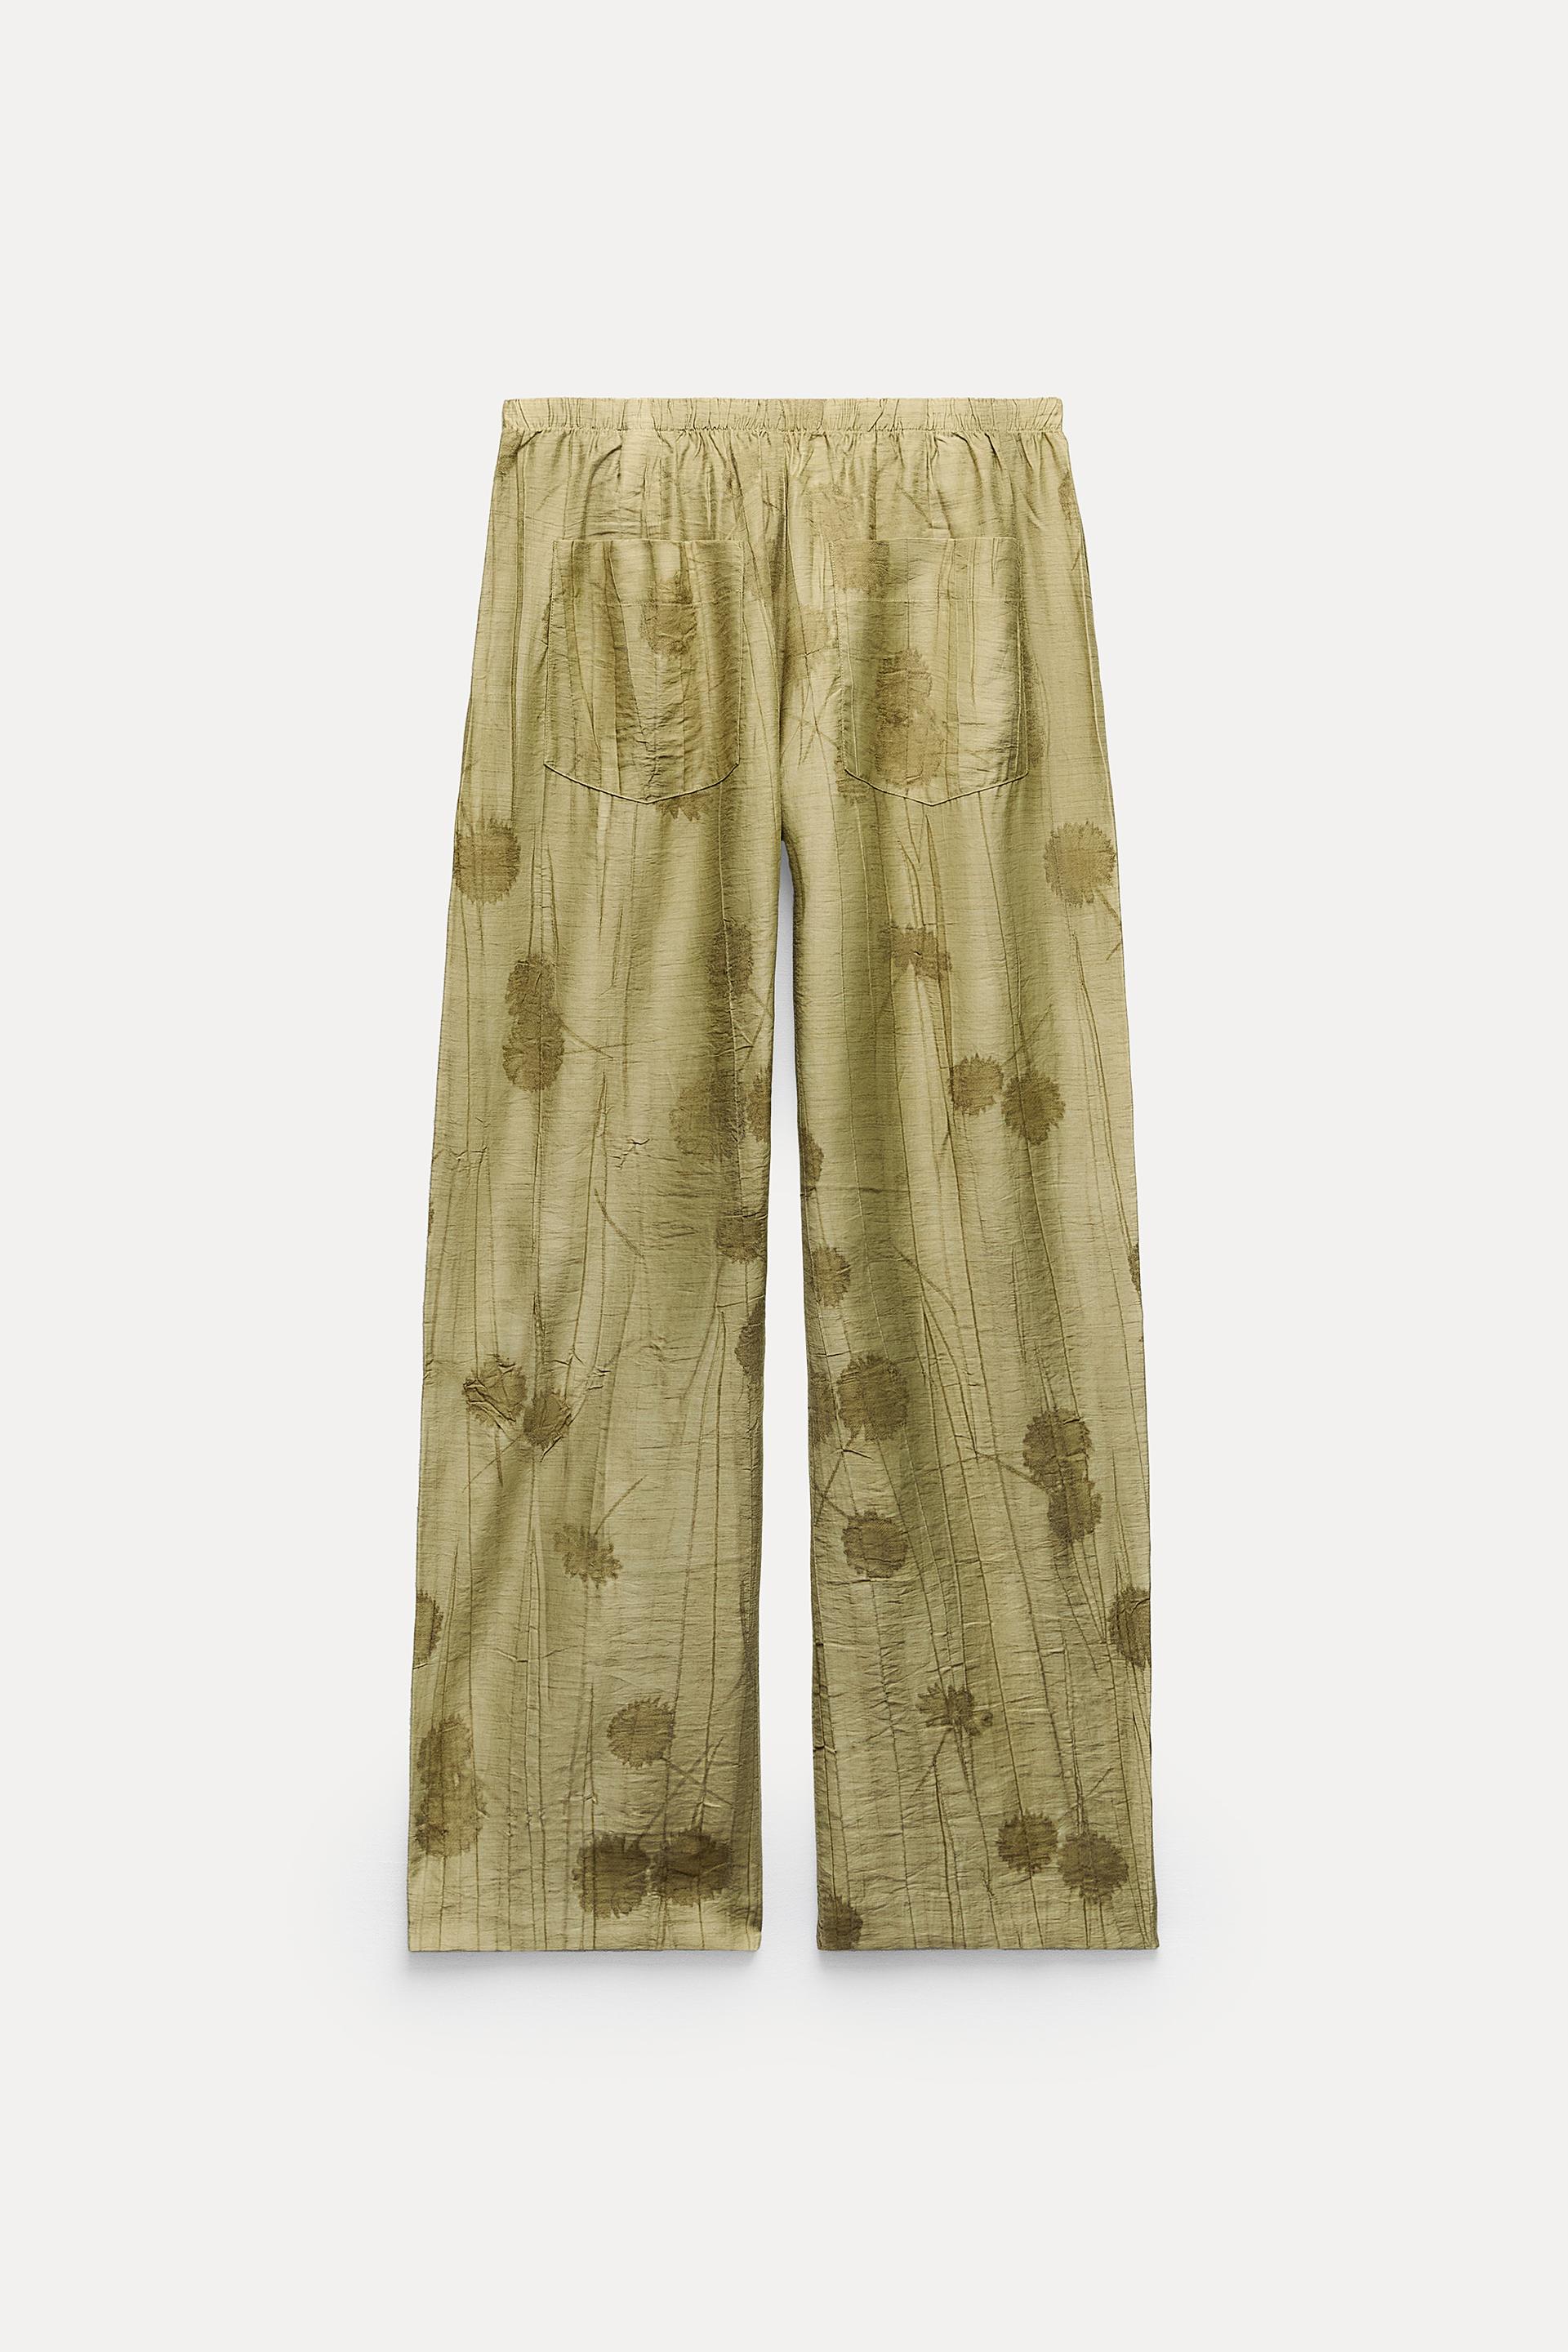 Zara Geometric Pattern Jacquard Knit Wide Leg Pants Green